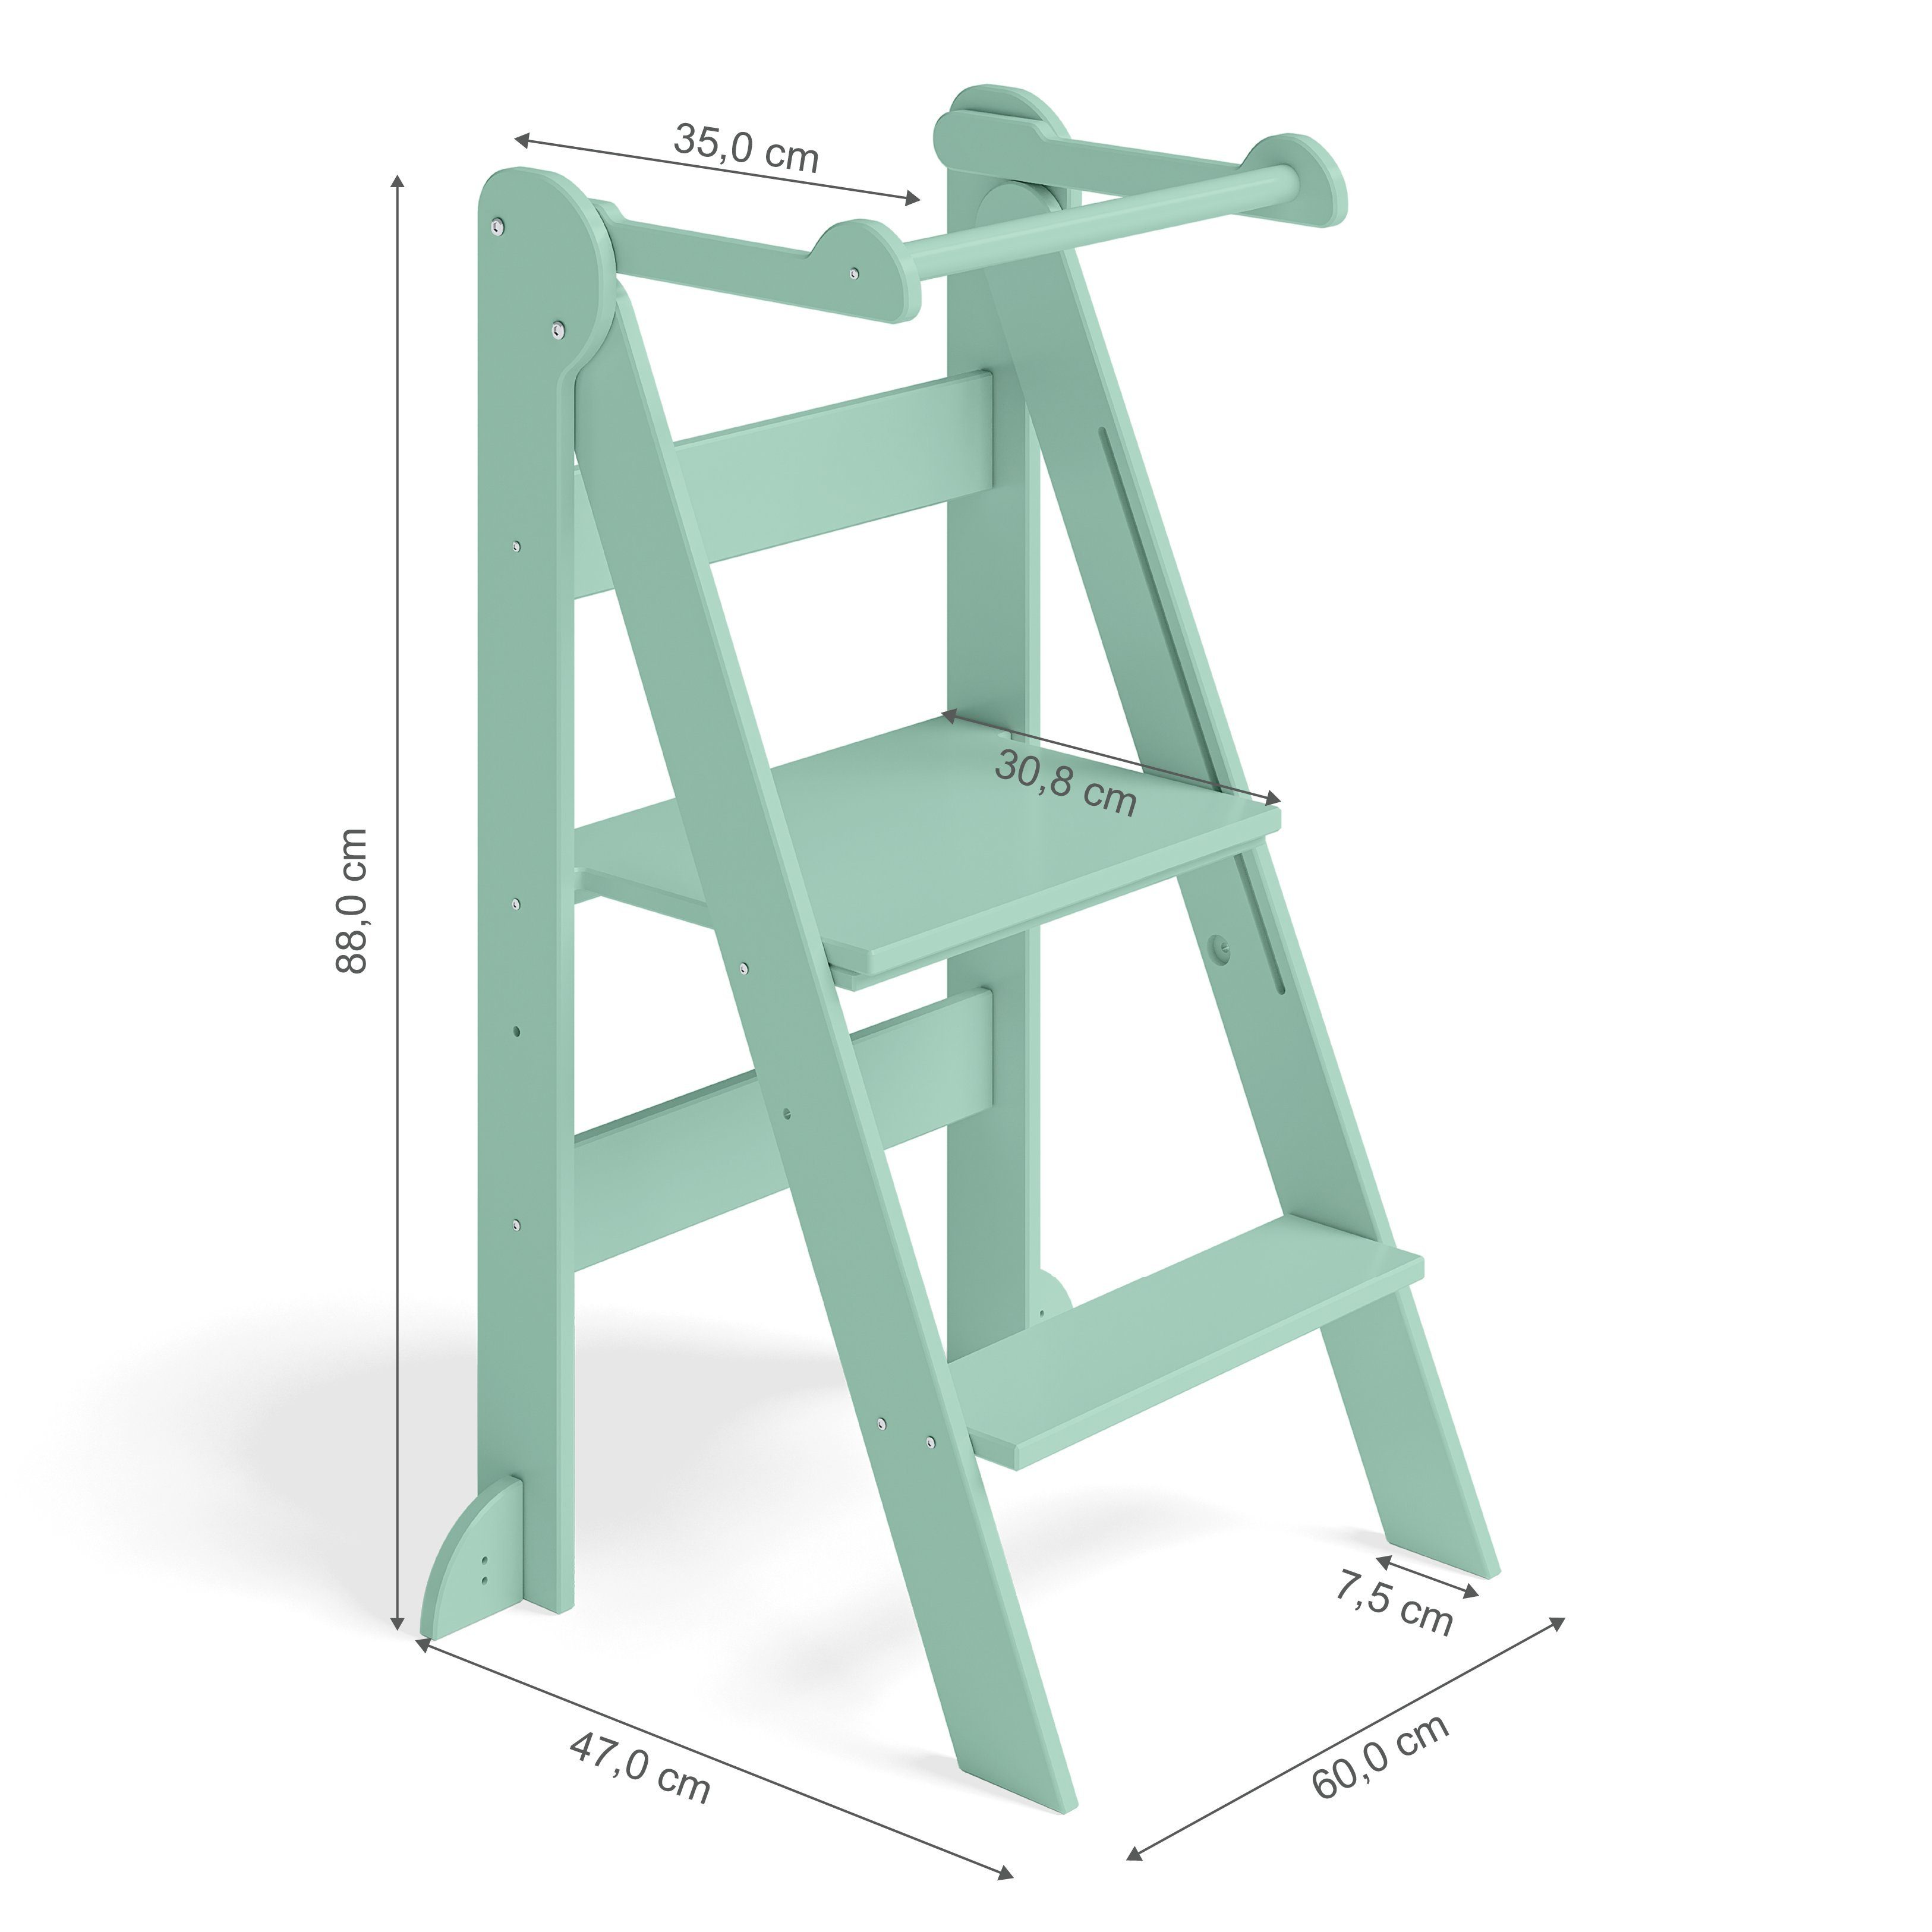 Bellabino Stehhilfe Tay (Lernturm), zusammenklappbar, mintgrün mintgrün 2-fach mintgrün höhenverstellbar, 